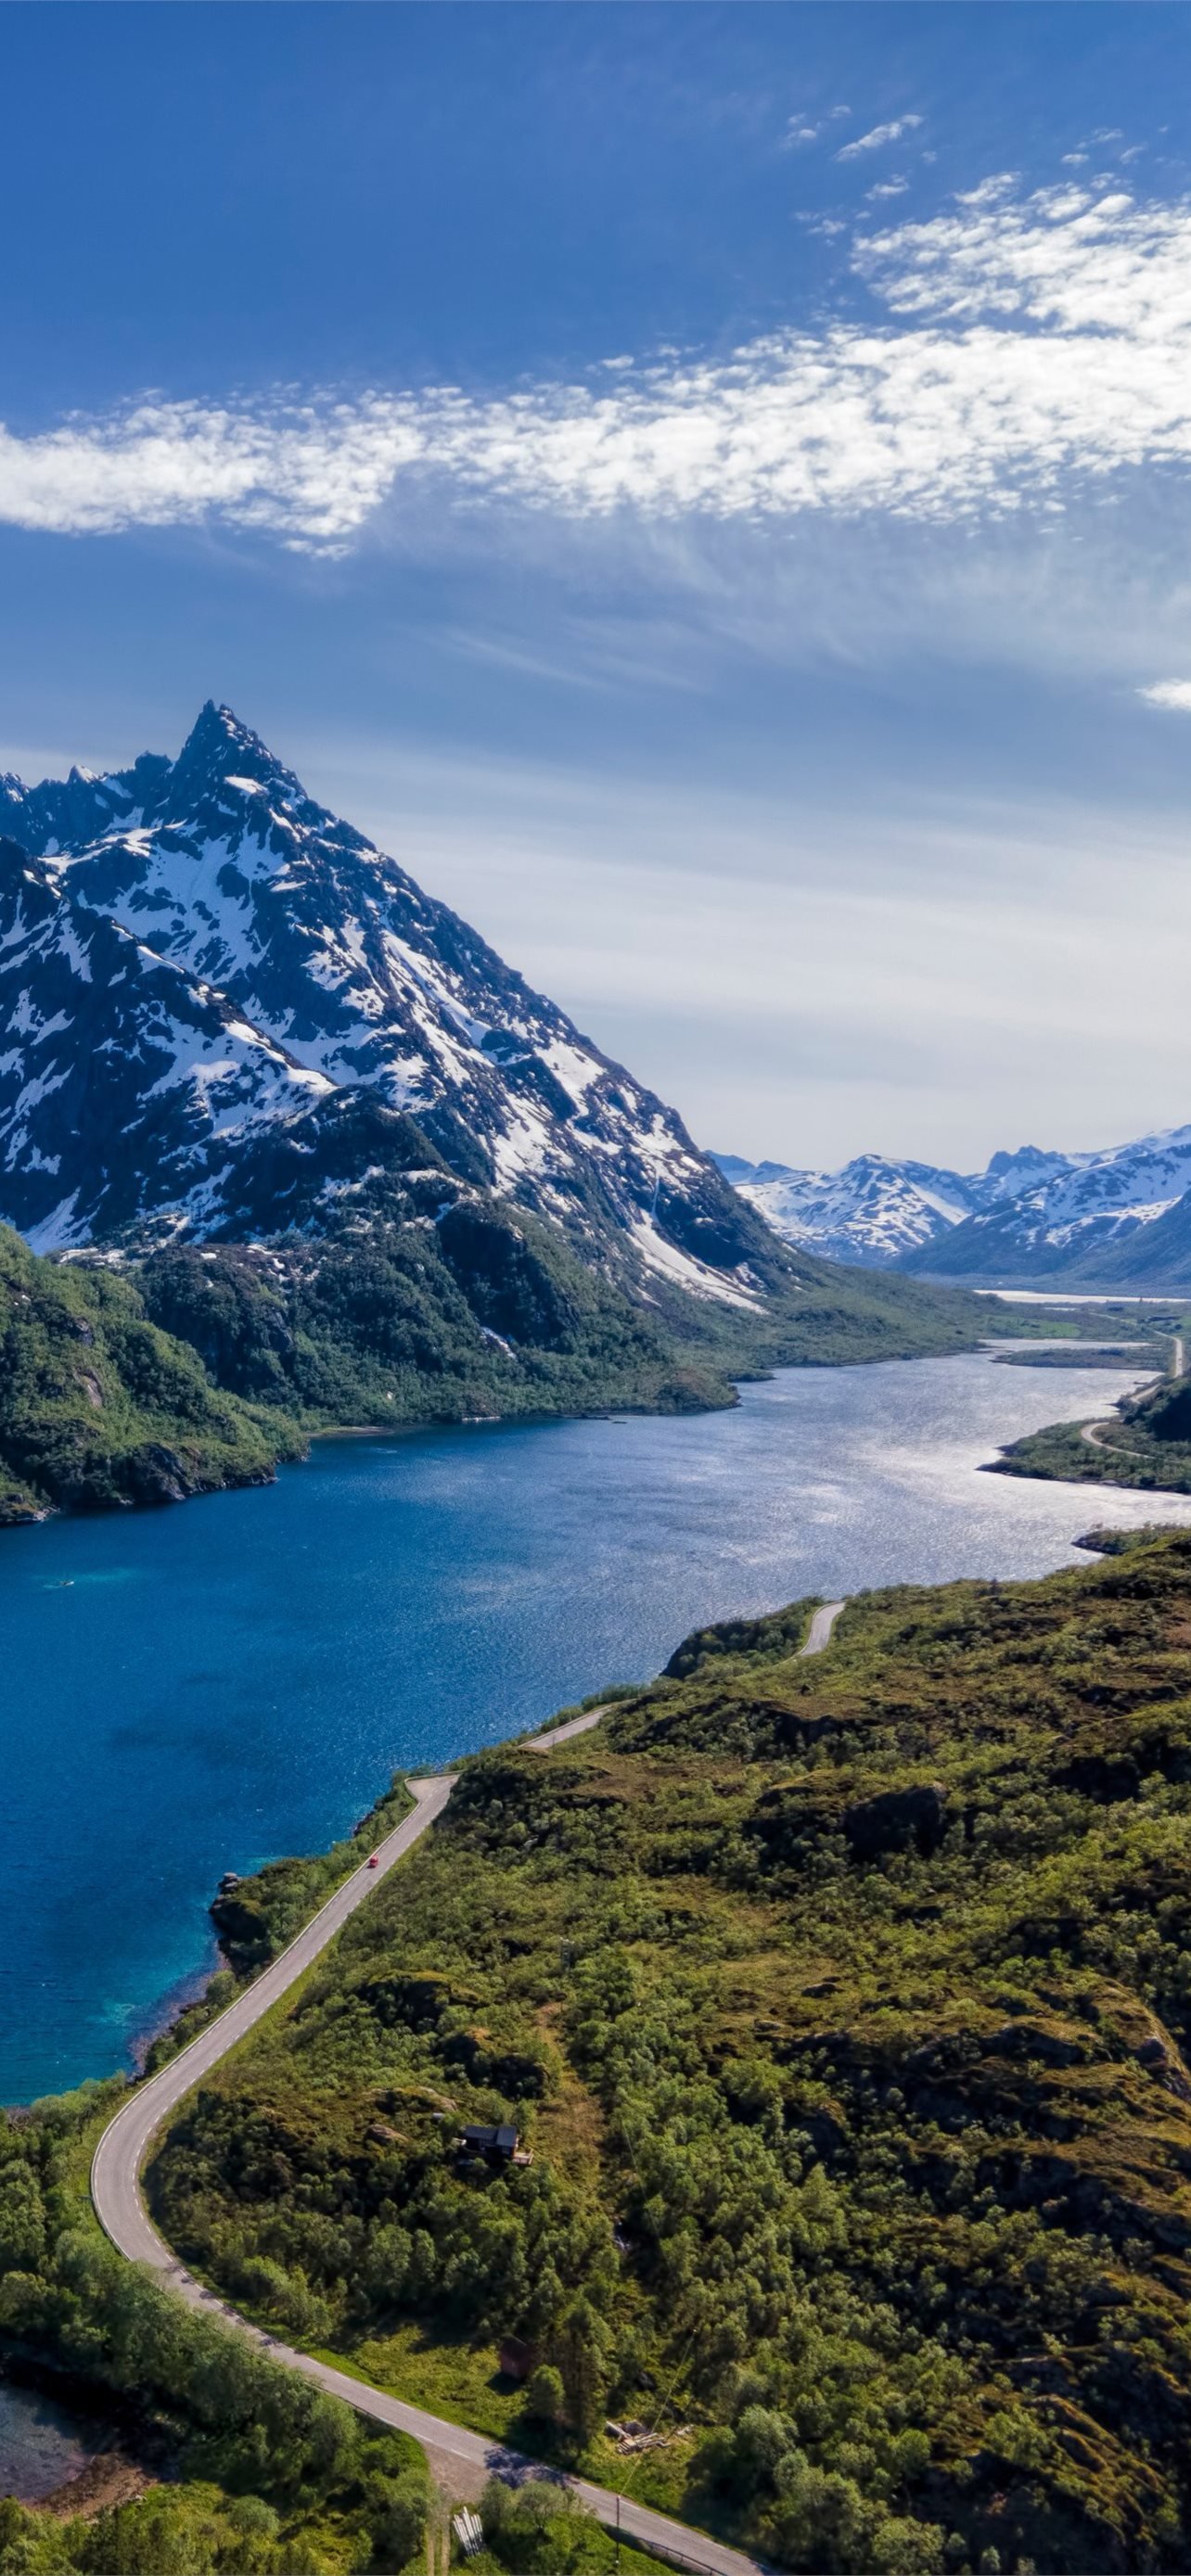 Mountains in Lofoten Norway 4k Ultra HD ID 6487 iPhone Wallpaper Free Download